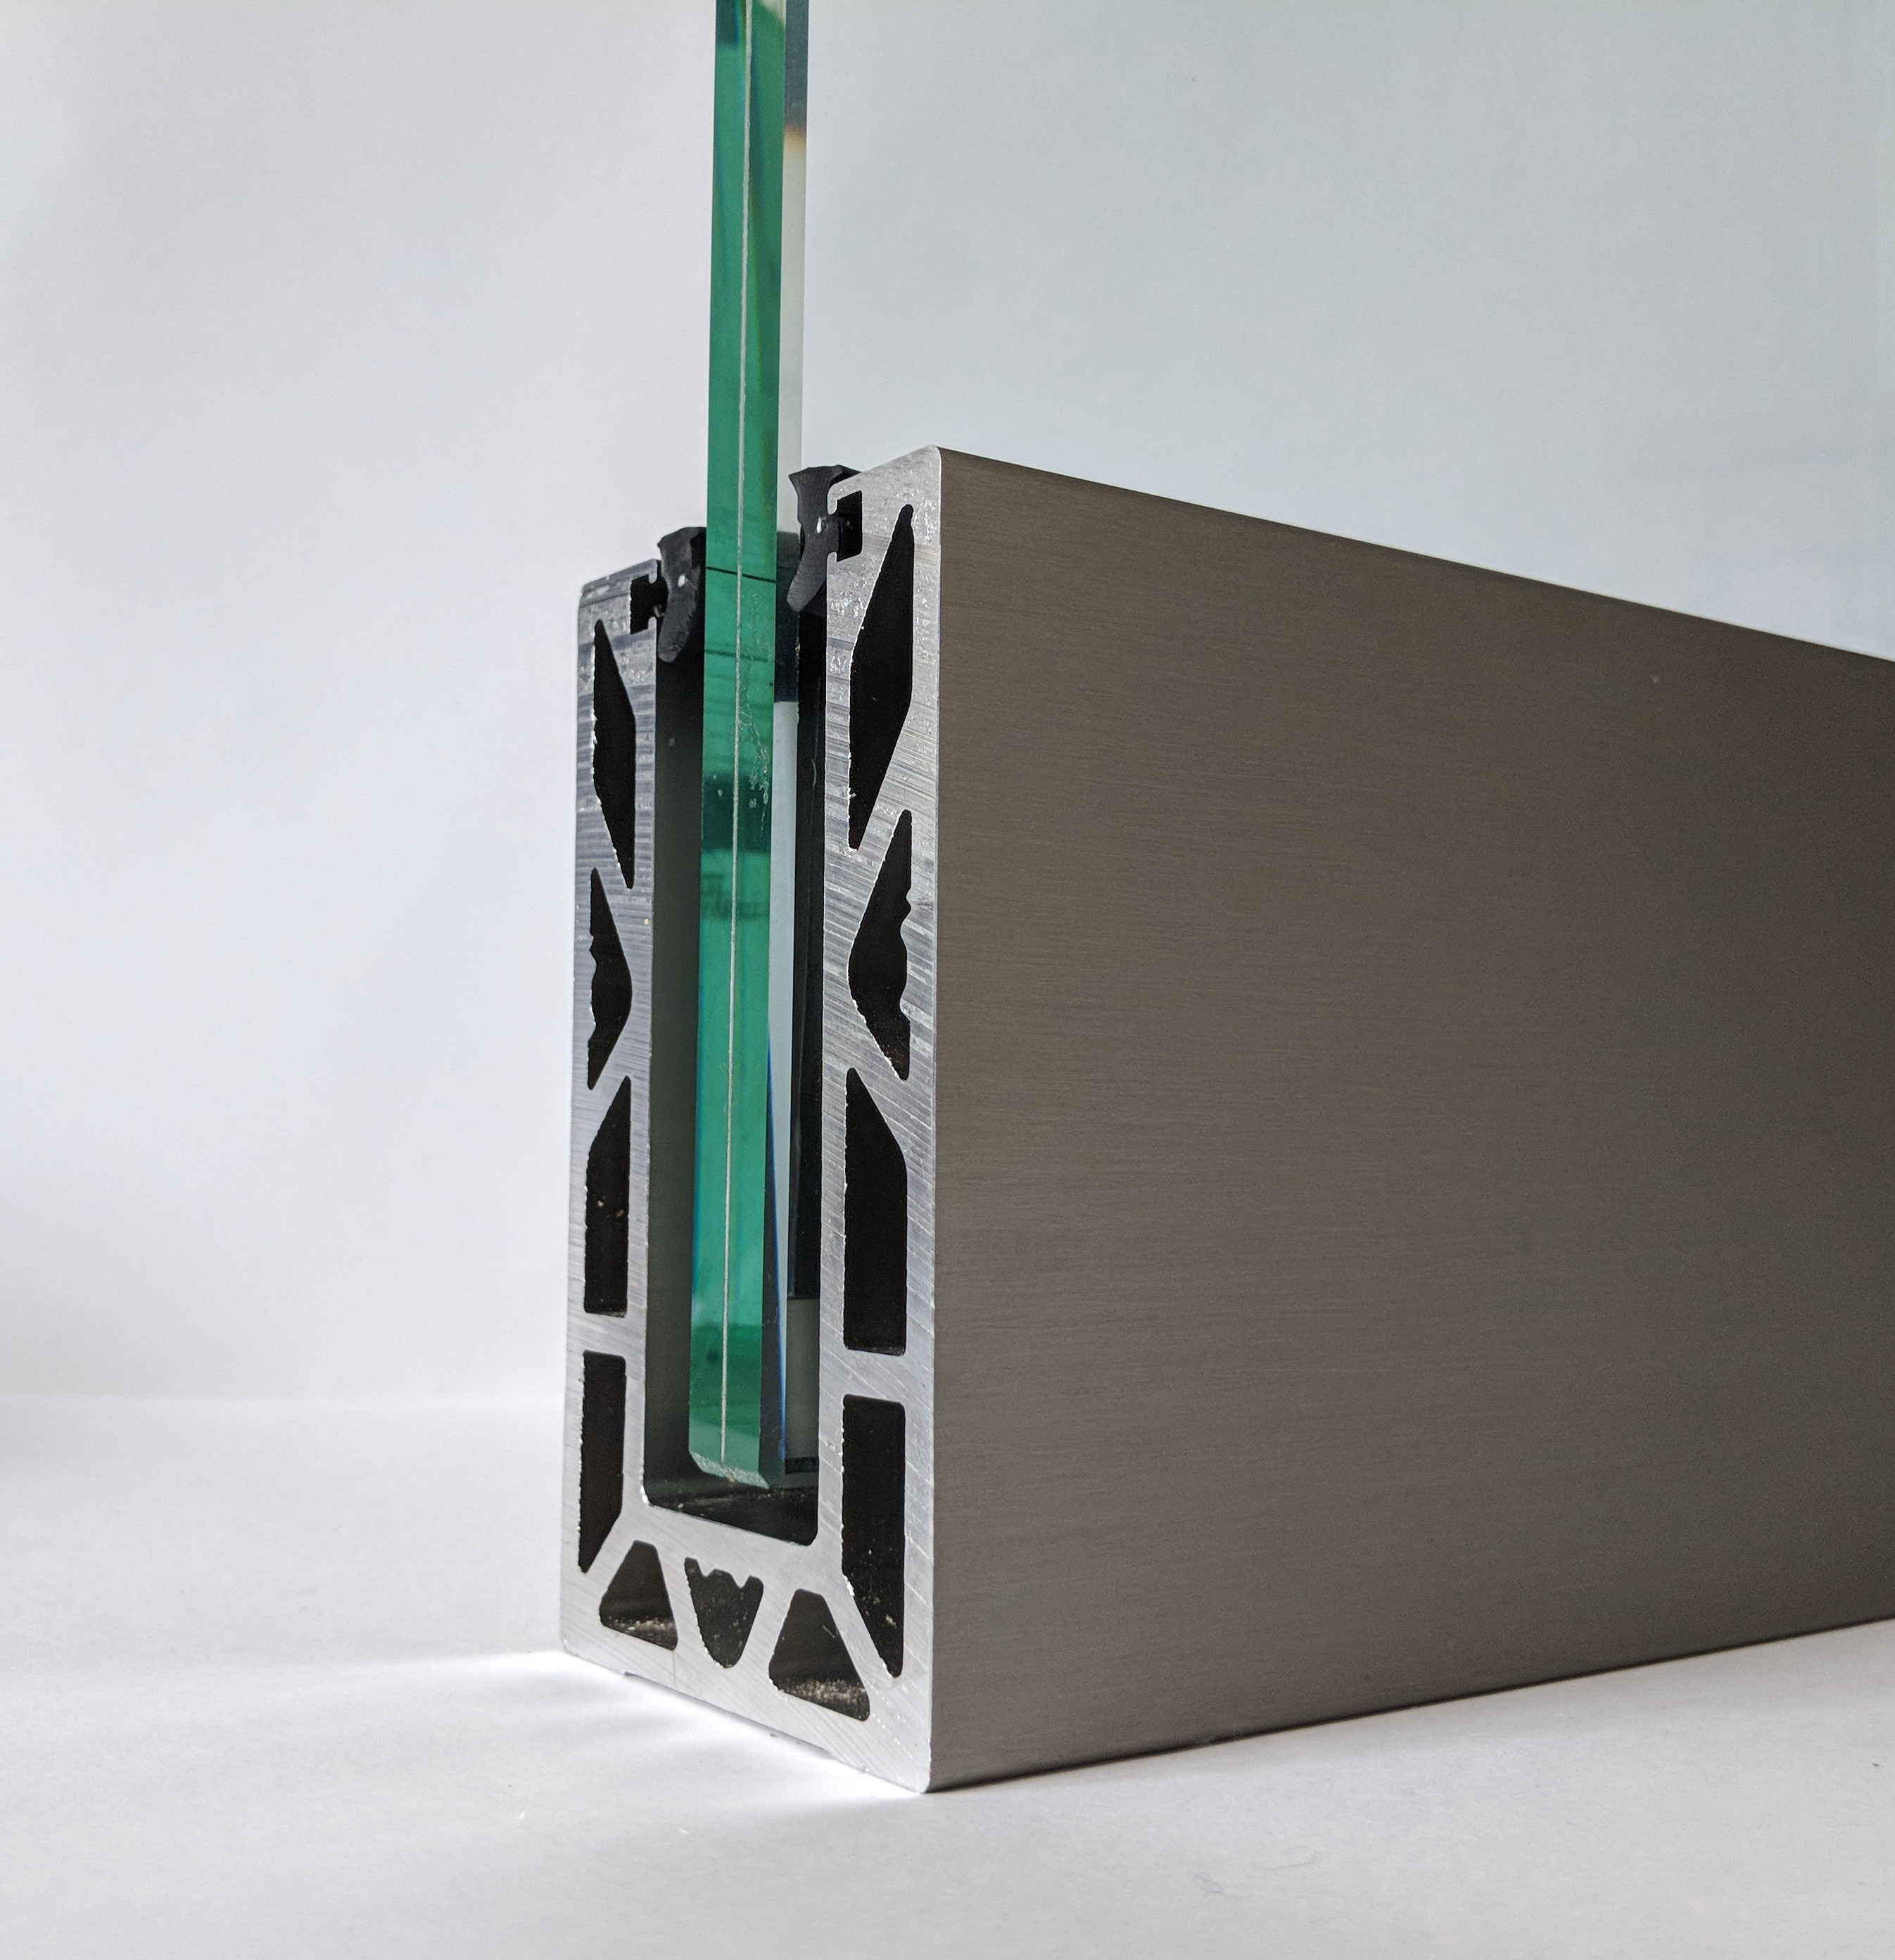 open end of solus frameless glass balustrade system from Vantage